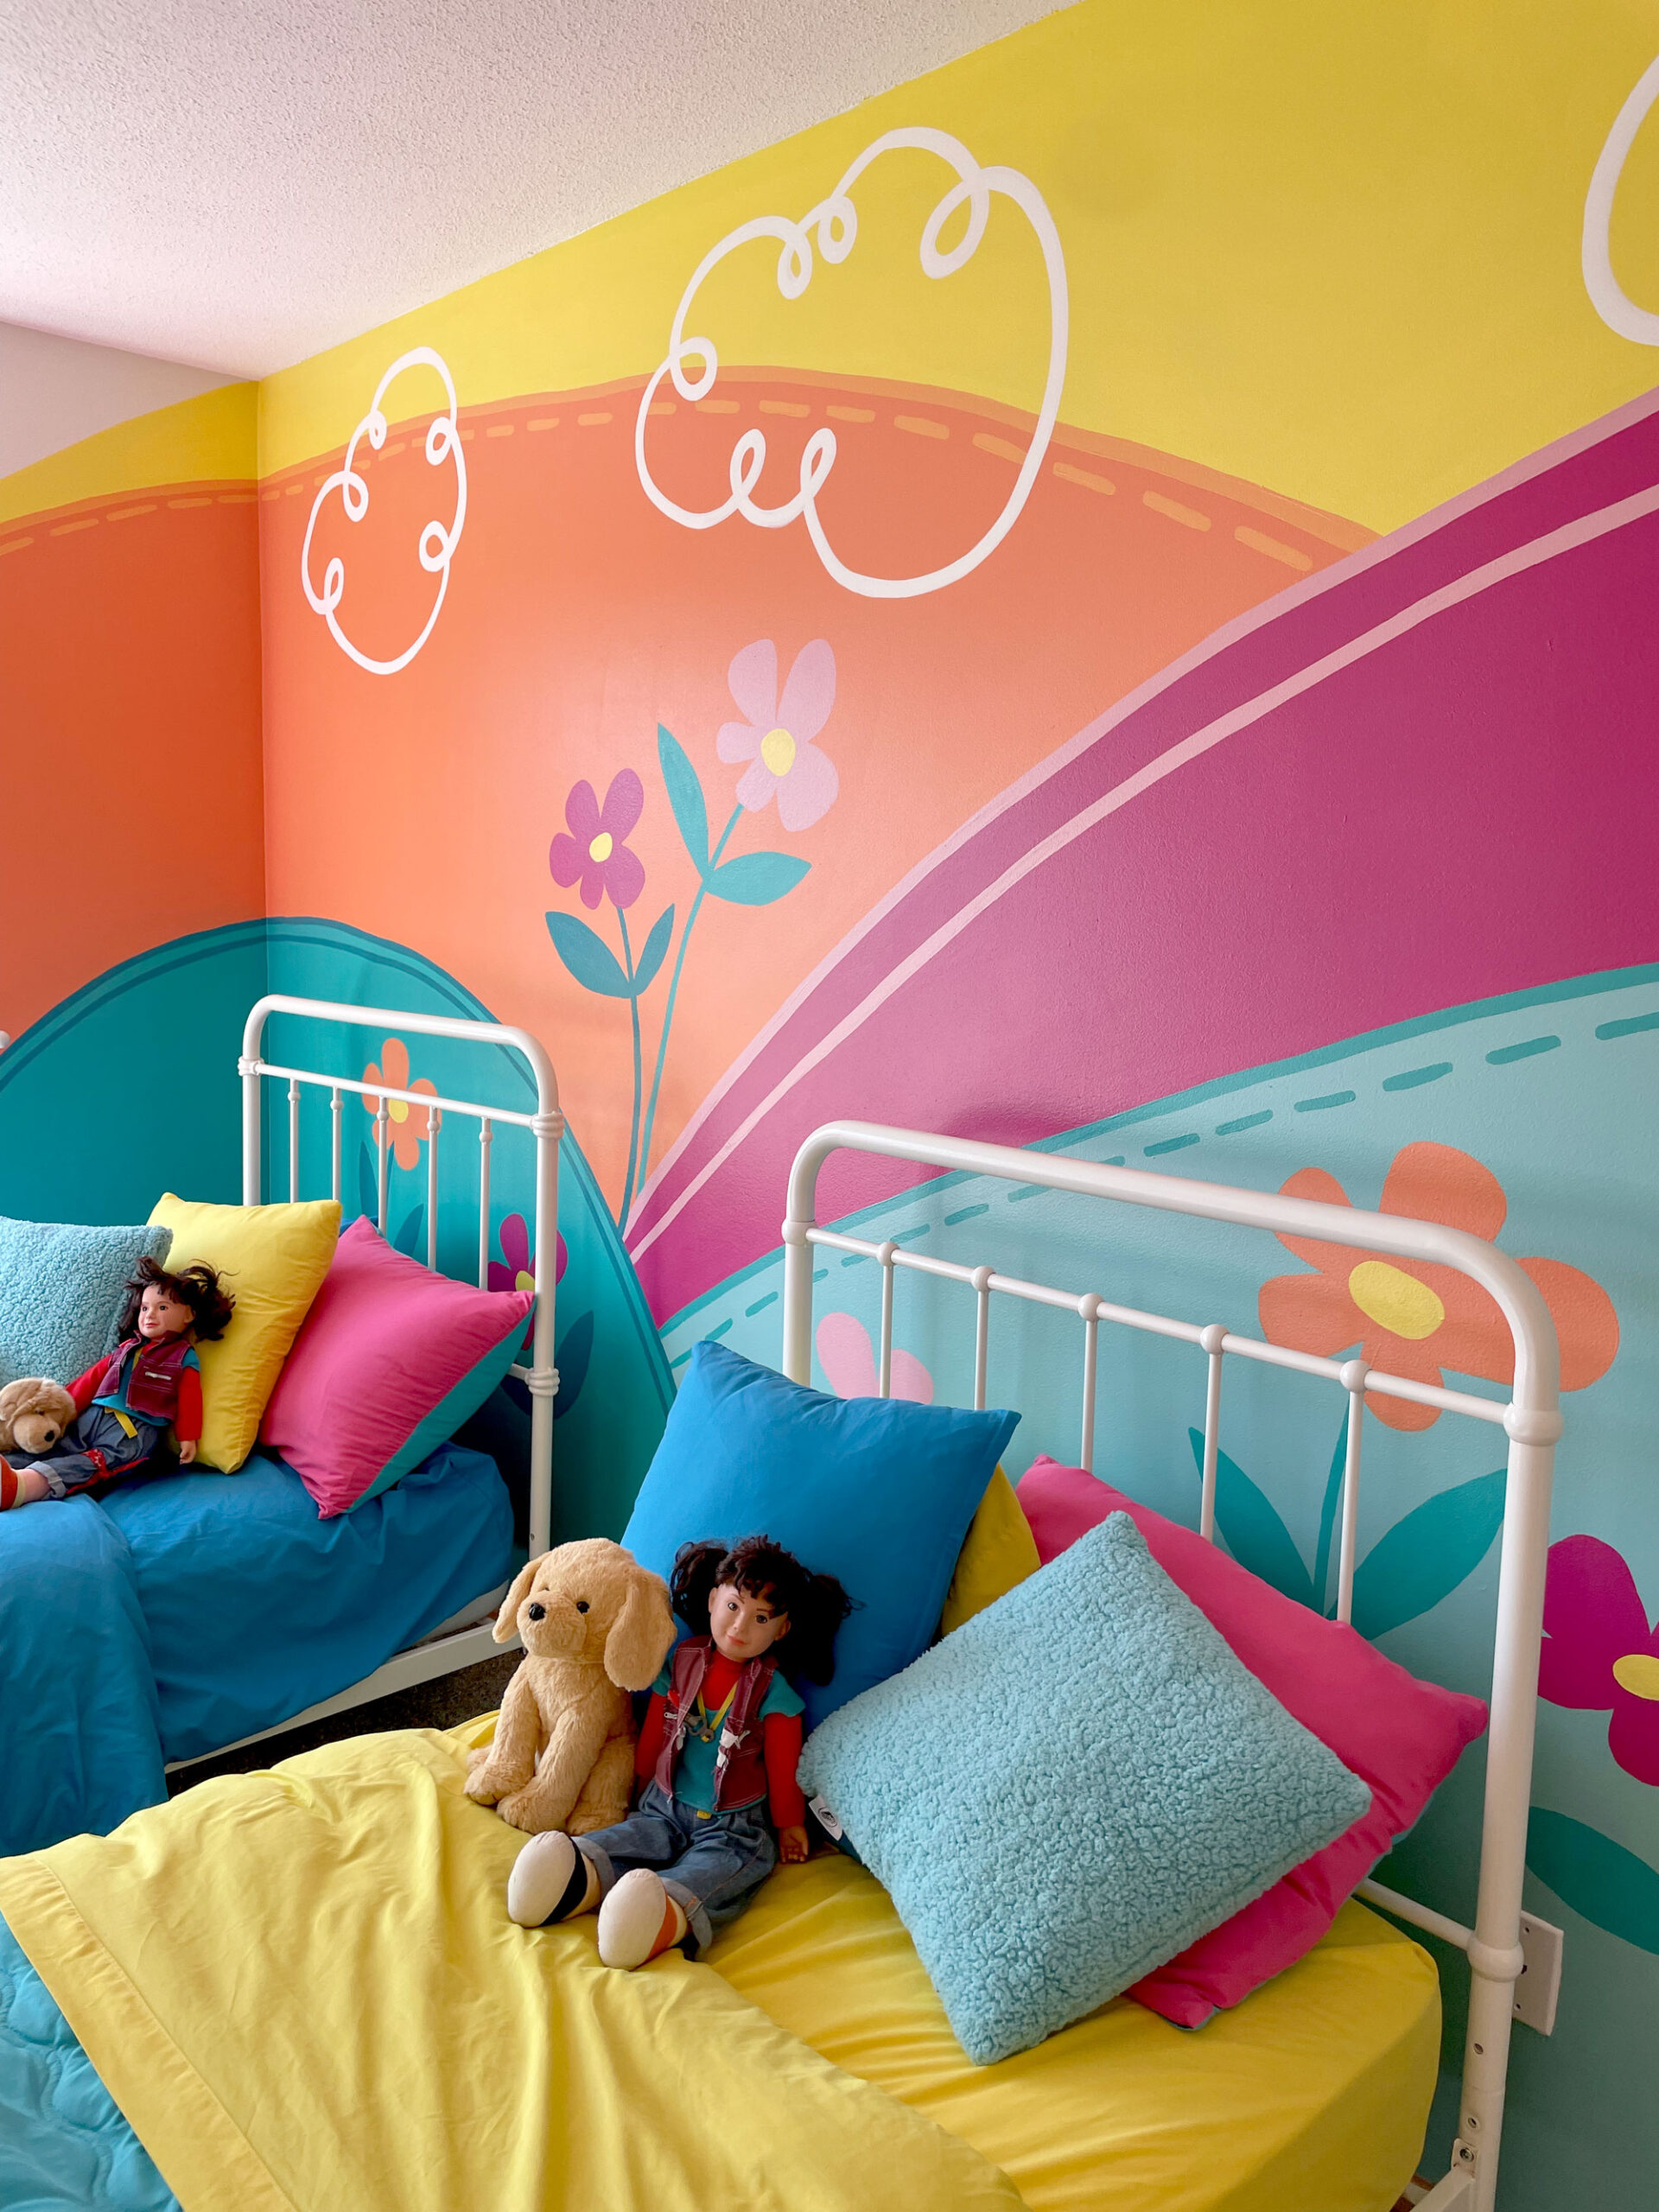 Punky Brewster Mural, Punky Brewster bedroom decor and mural, Punky Brewster kids bedroom, Punky mural idea